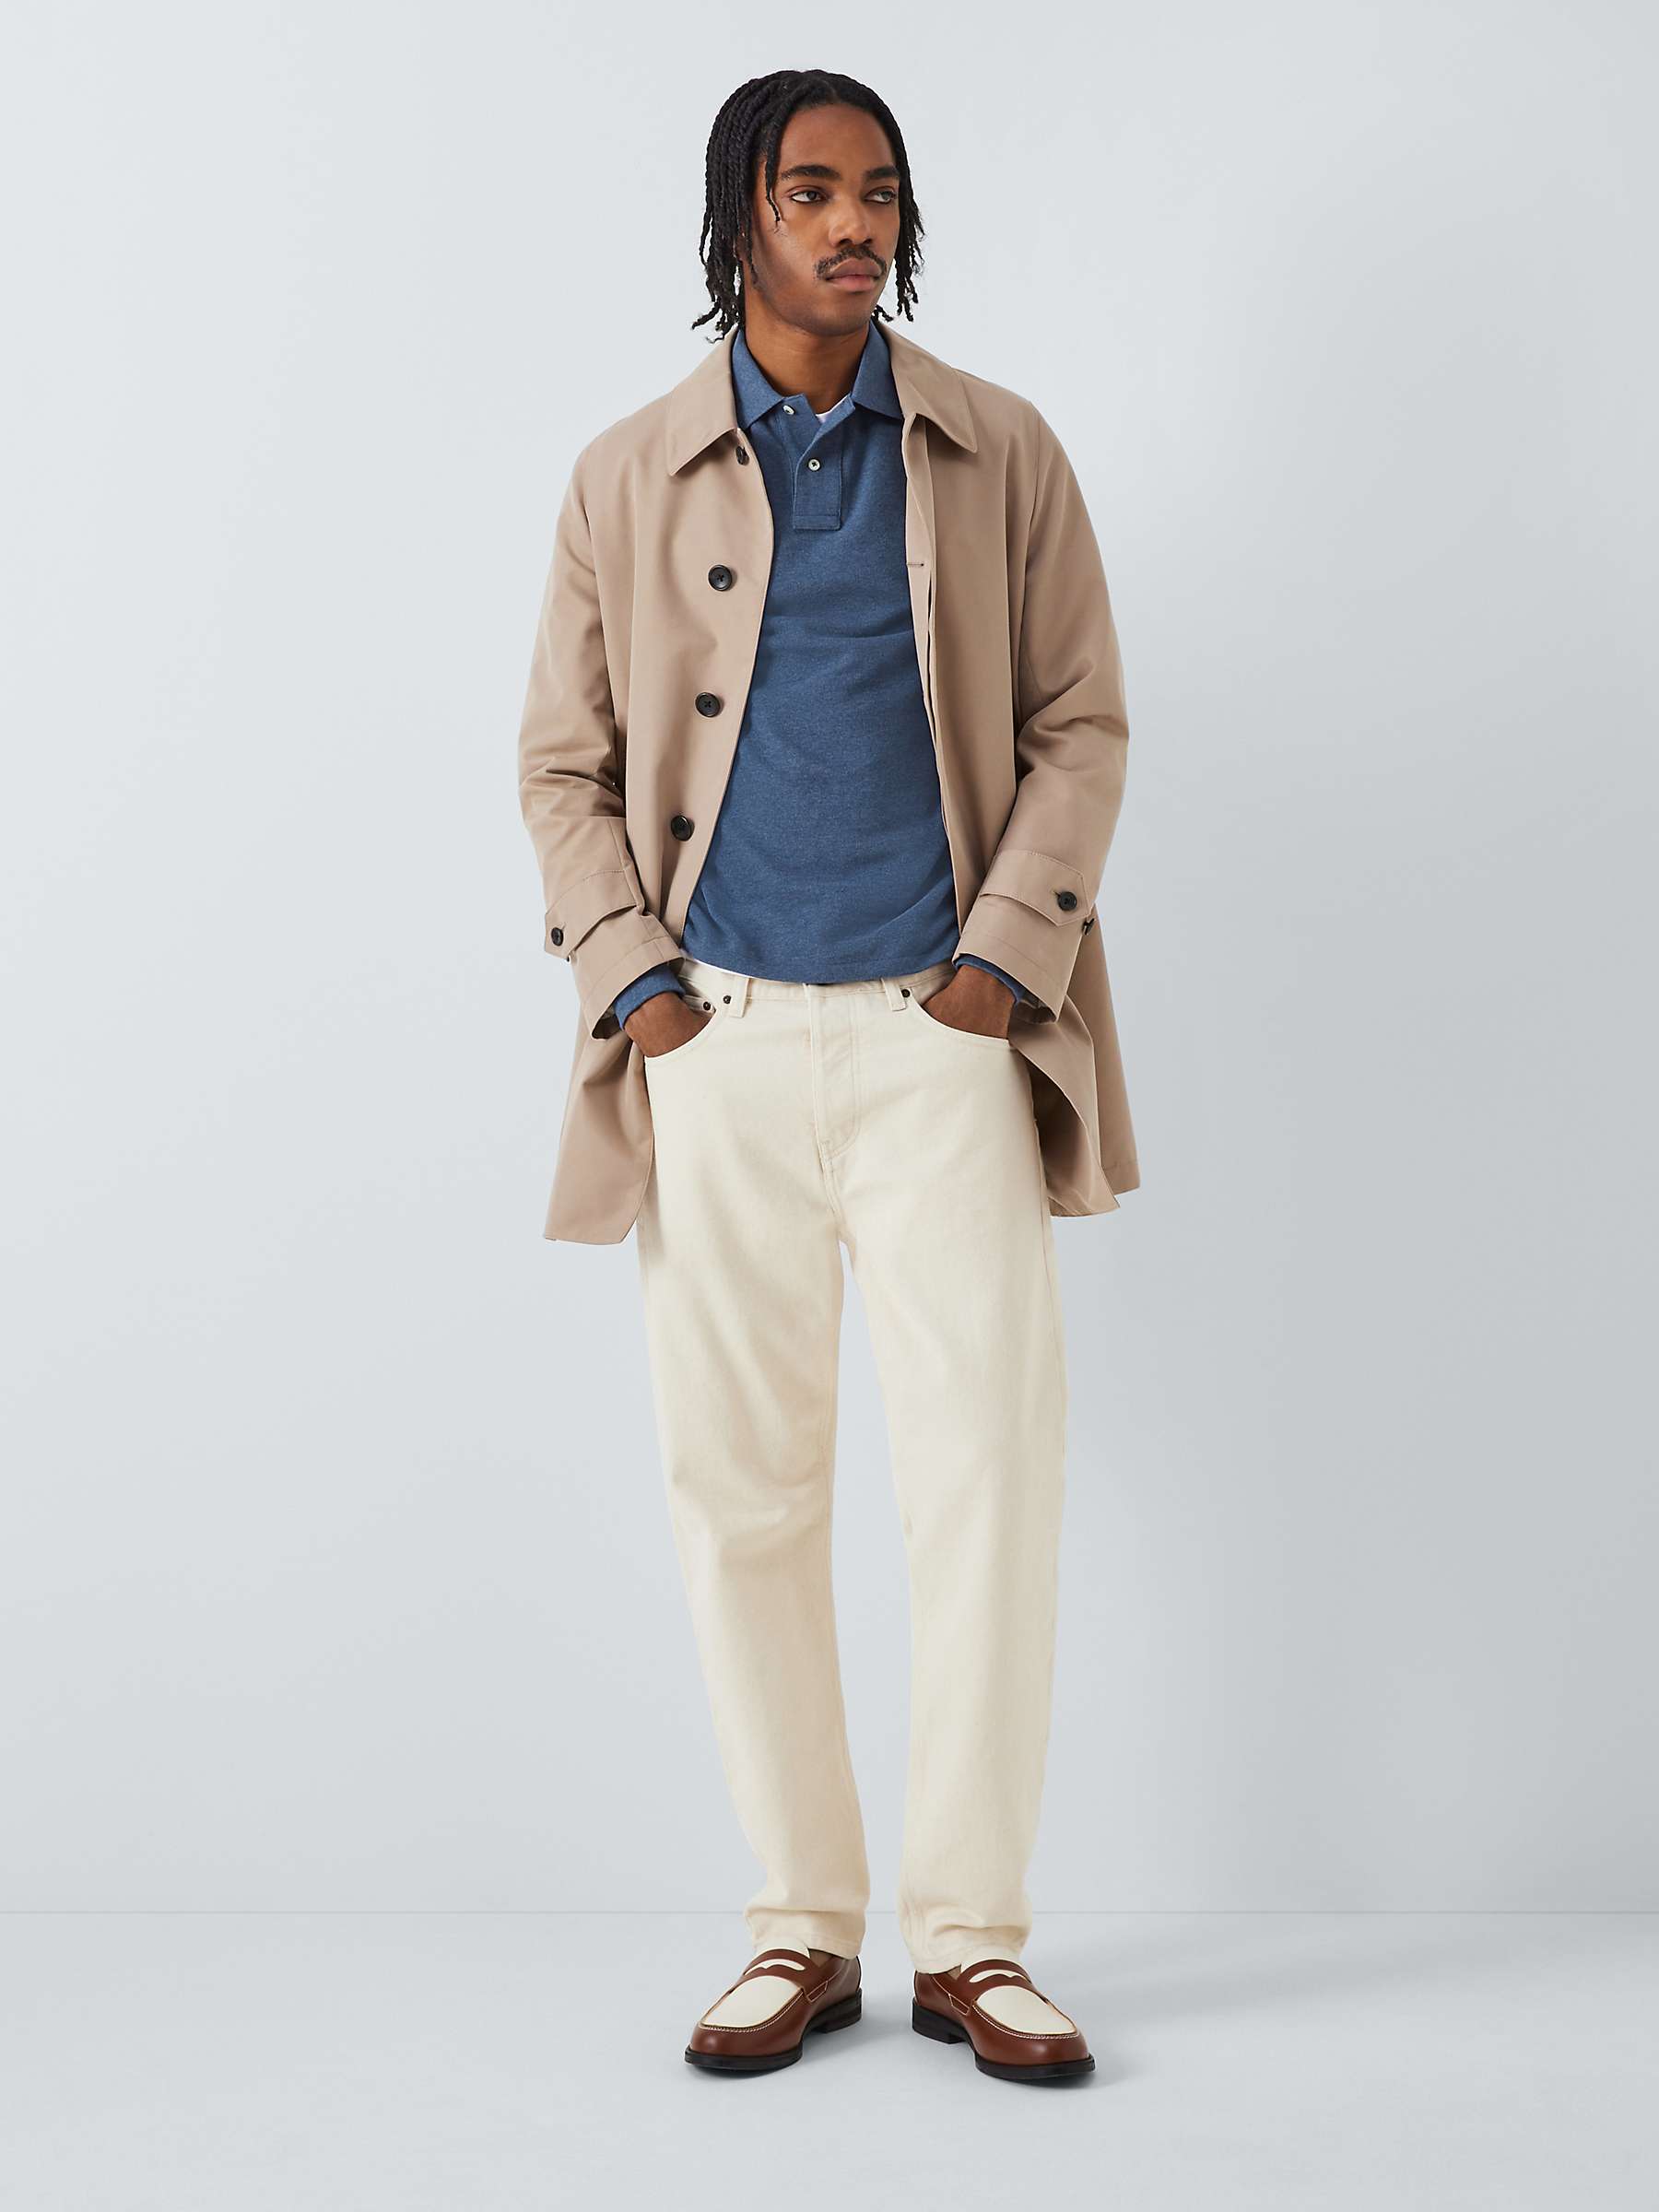 Buy Polo Ralph Lauren Slim Fit Mesh Long Sleeve Polo Shirt, Blue Online at johnlewis.com